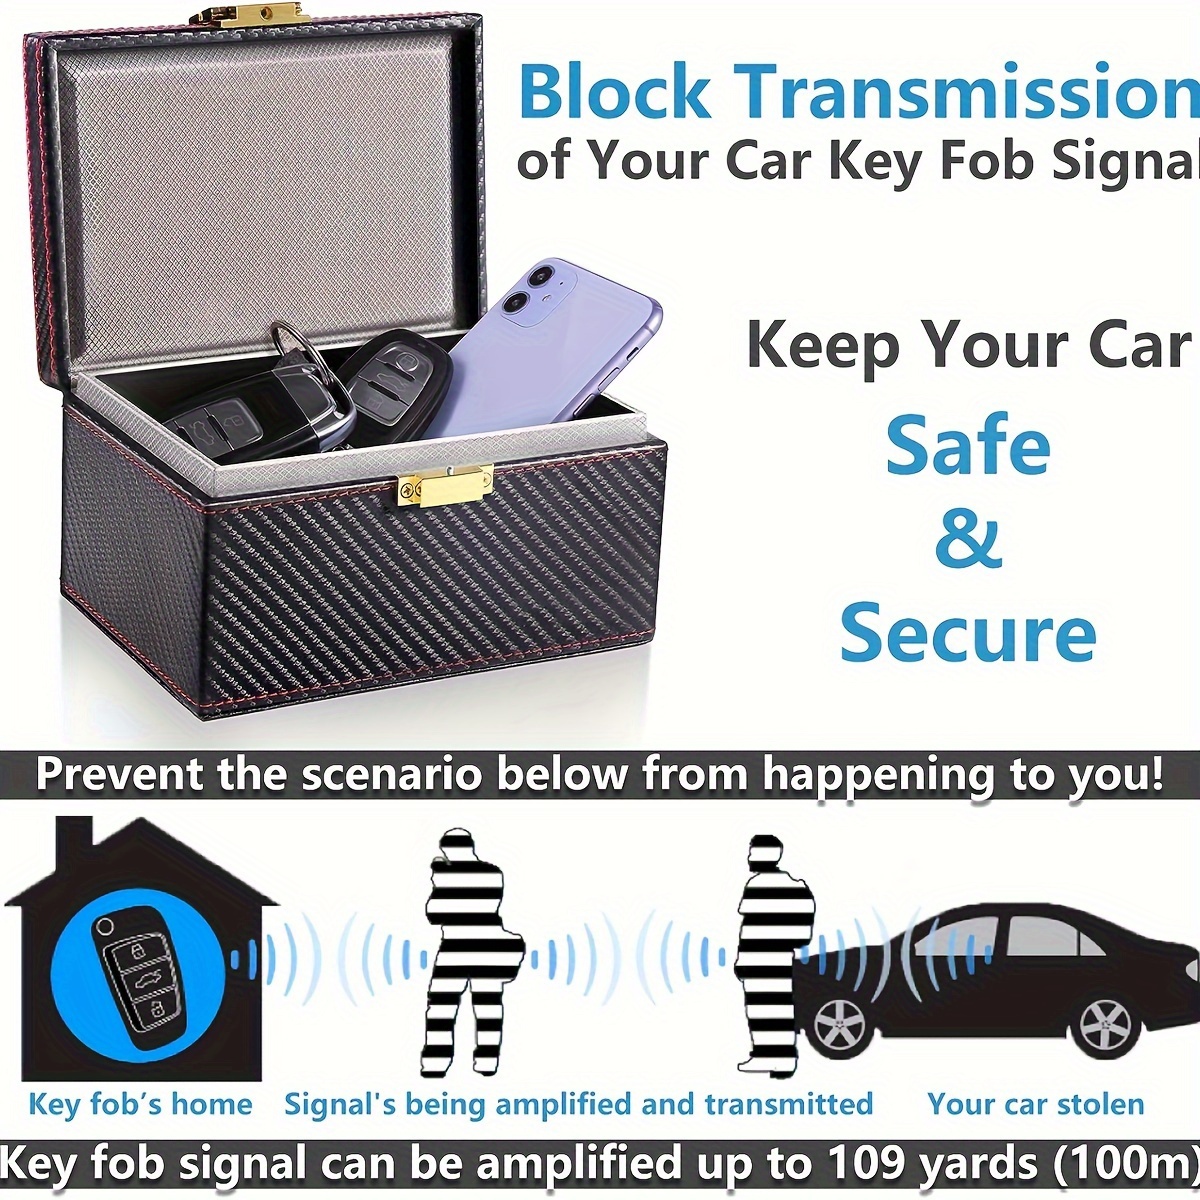 FARADAY Box für Autoschlüssel, Autoschlüssel Signalblocker, Groß 22x14x10  cm, Signalblockierungsbox für Autoschlüssel, Schlüsselschutz Signalblocker